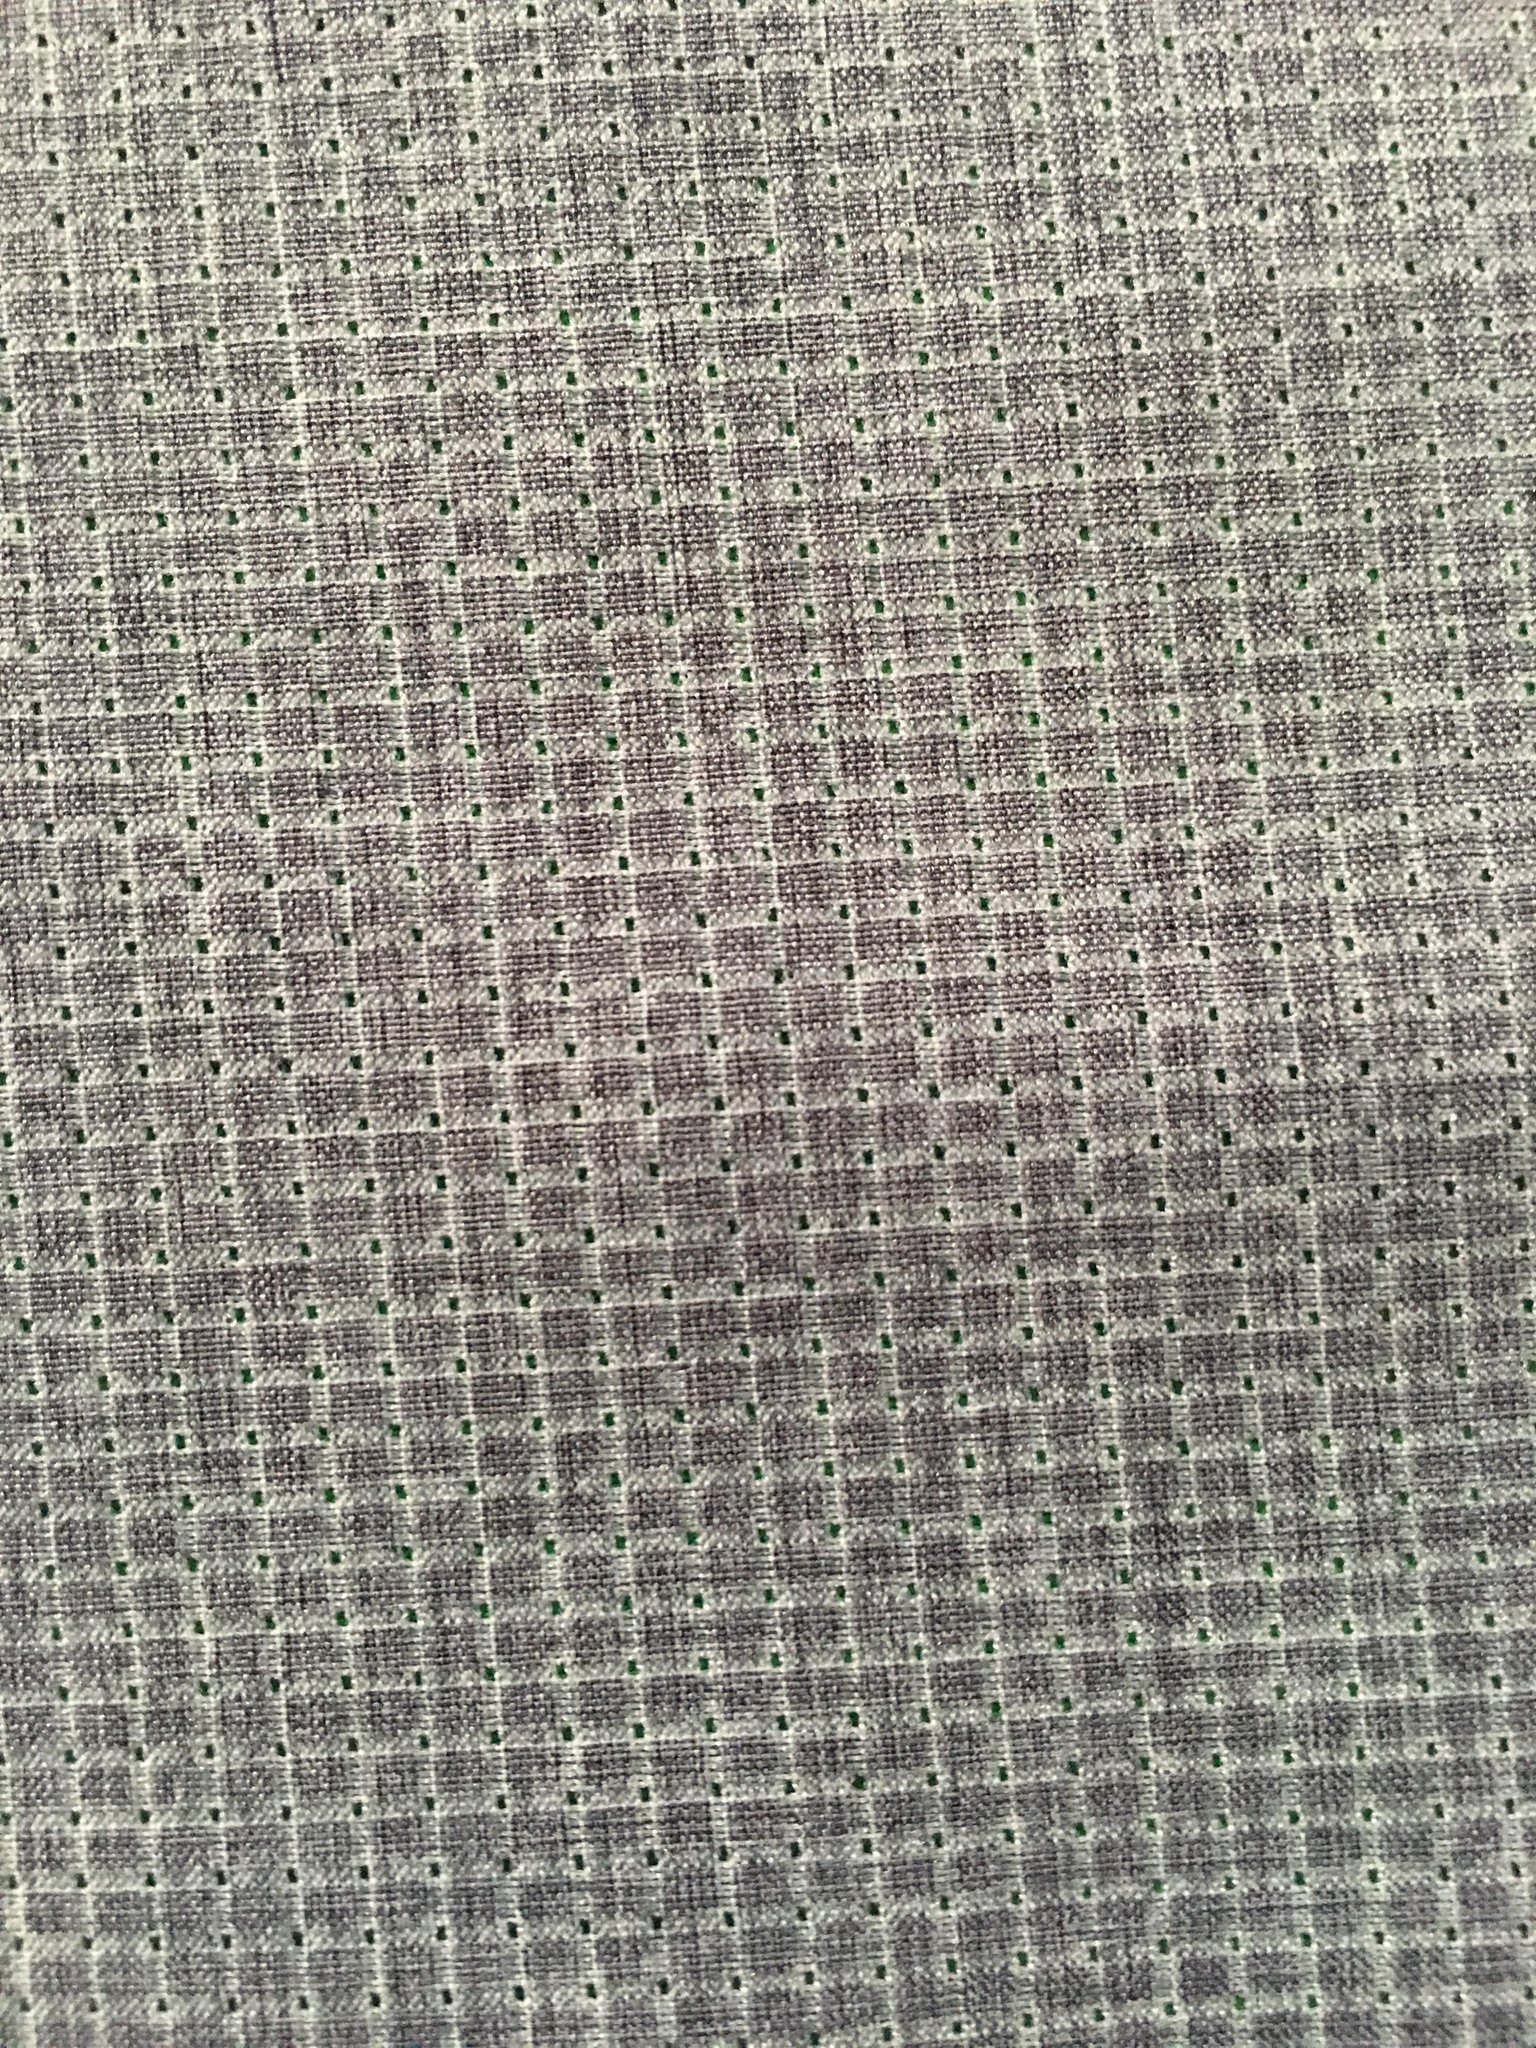 Woven stretch mesh fabric